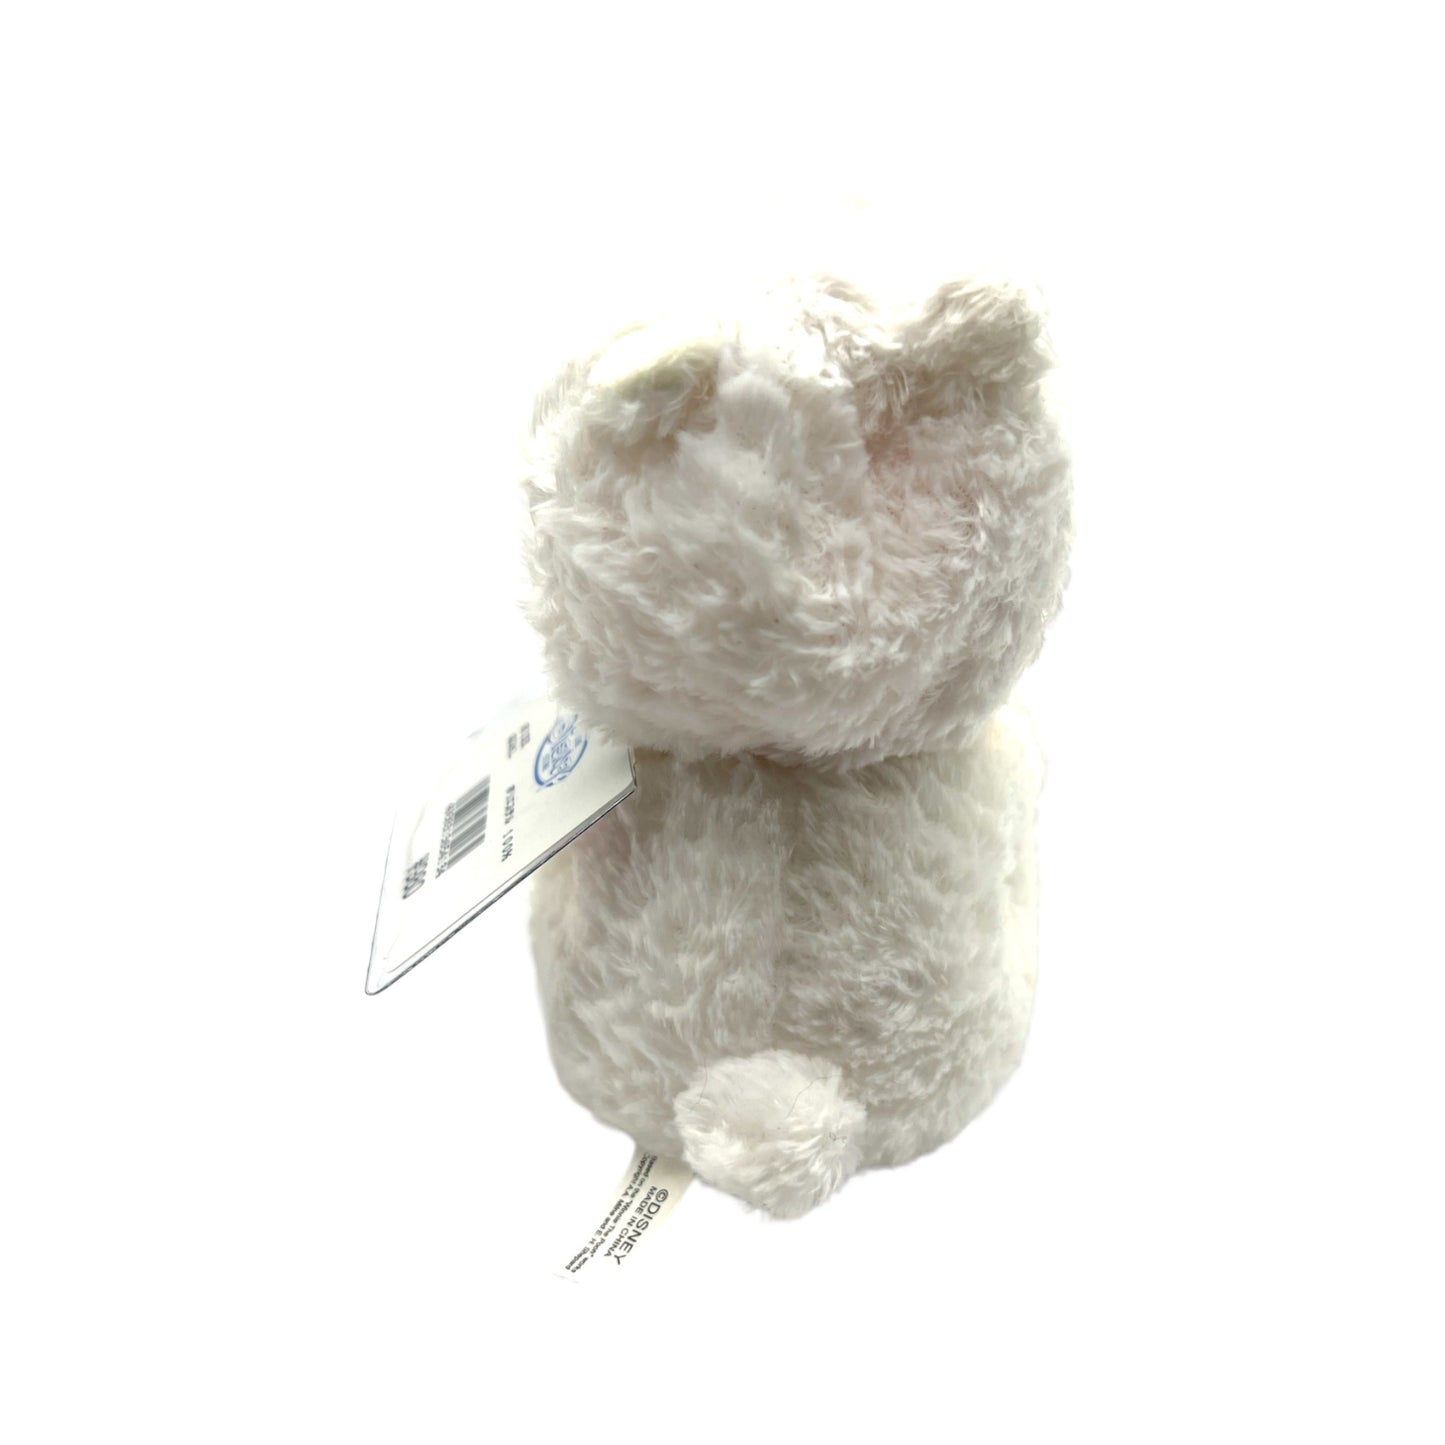 Disney Japan Store - Winnie the Pooh as Polar Bear - Mini Bean Bag - Vintage - 6"